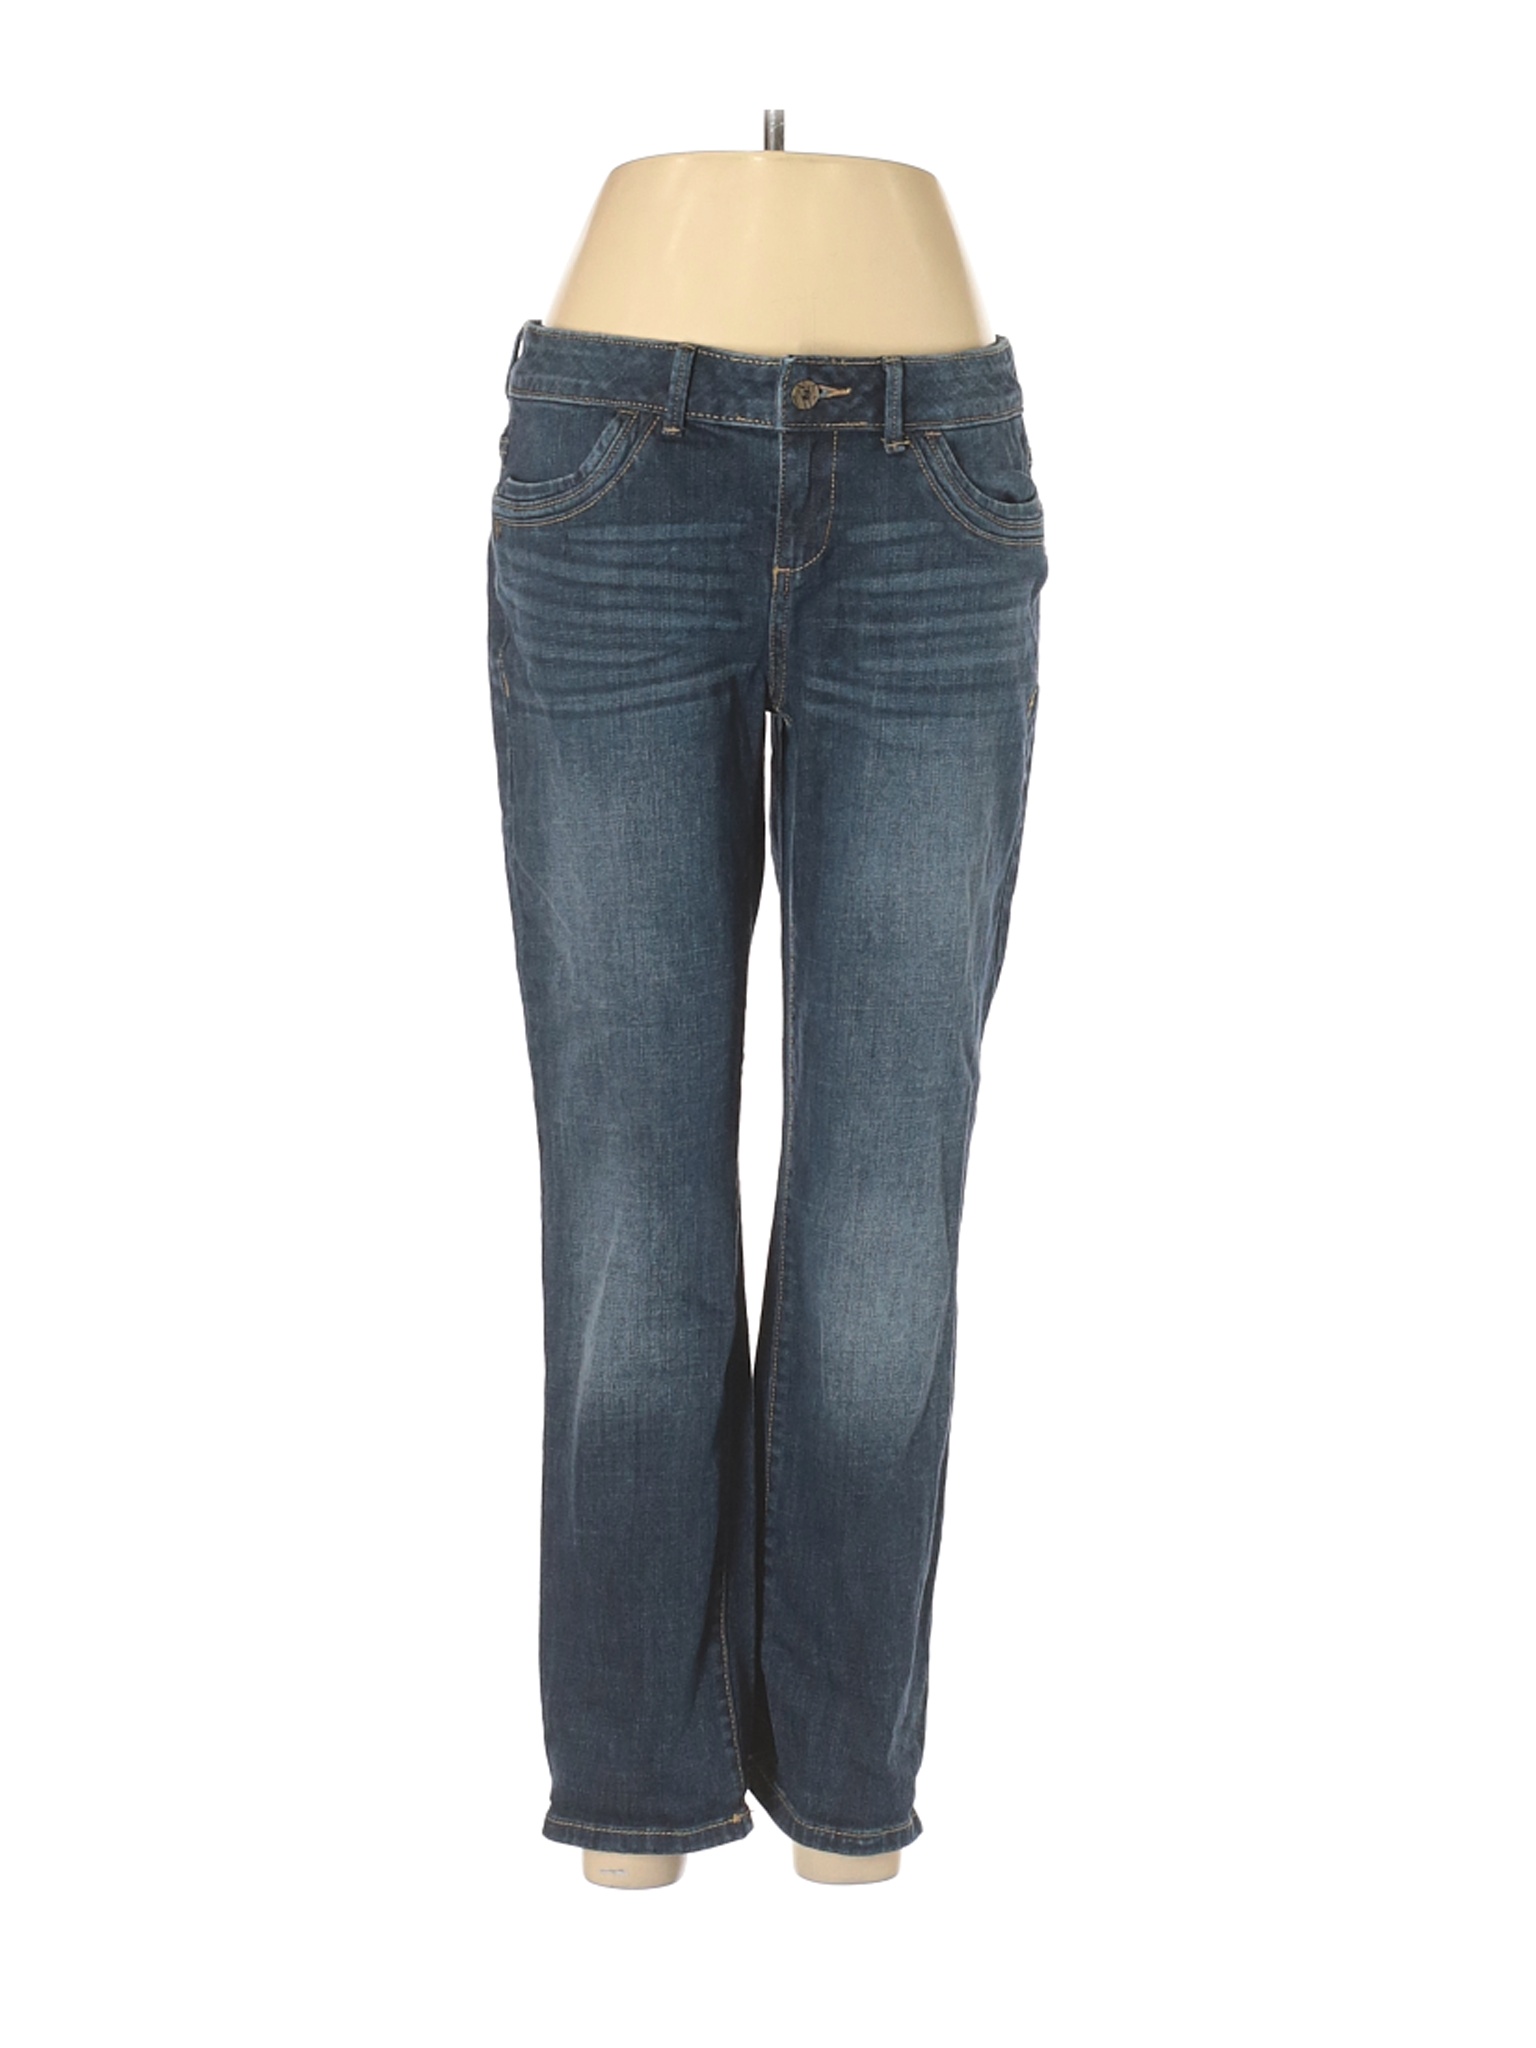 Simply Vera Vera Wang Women Blue Jeans 8 | eBay